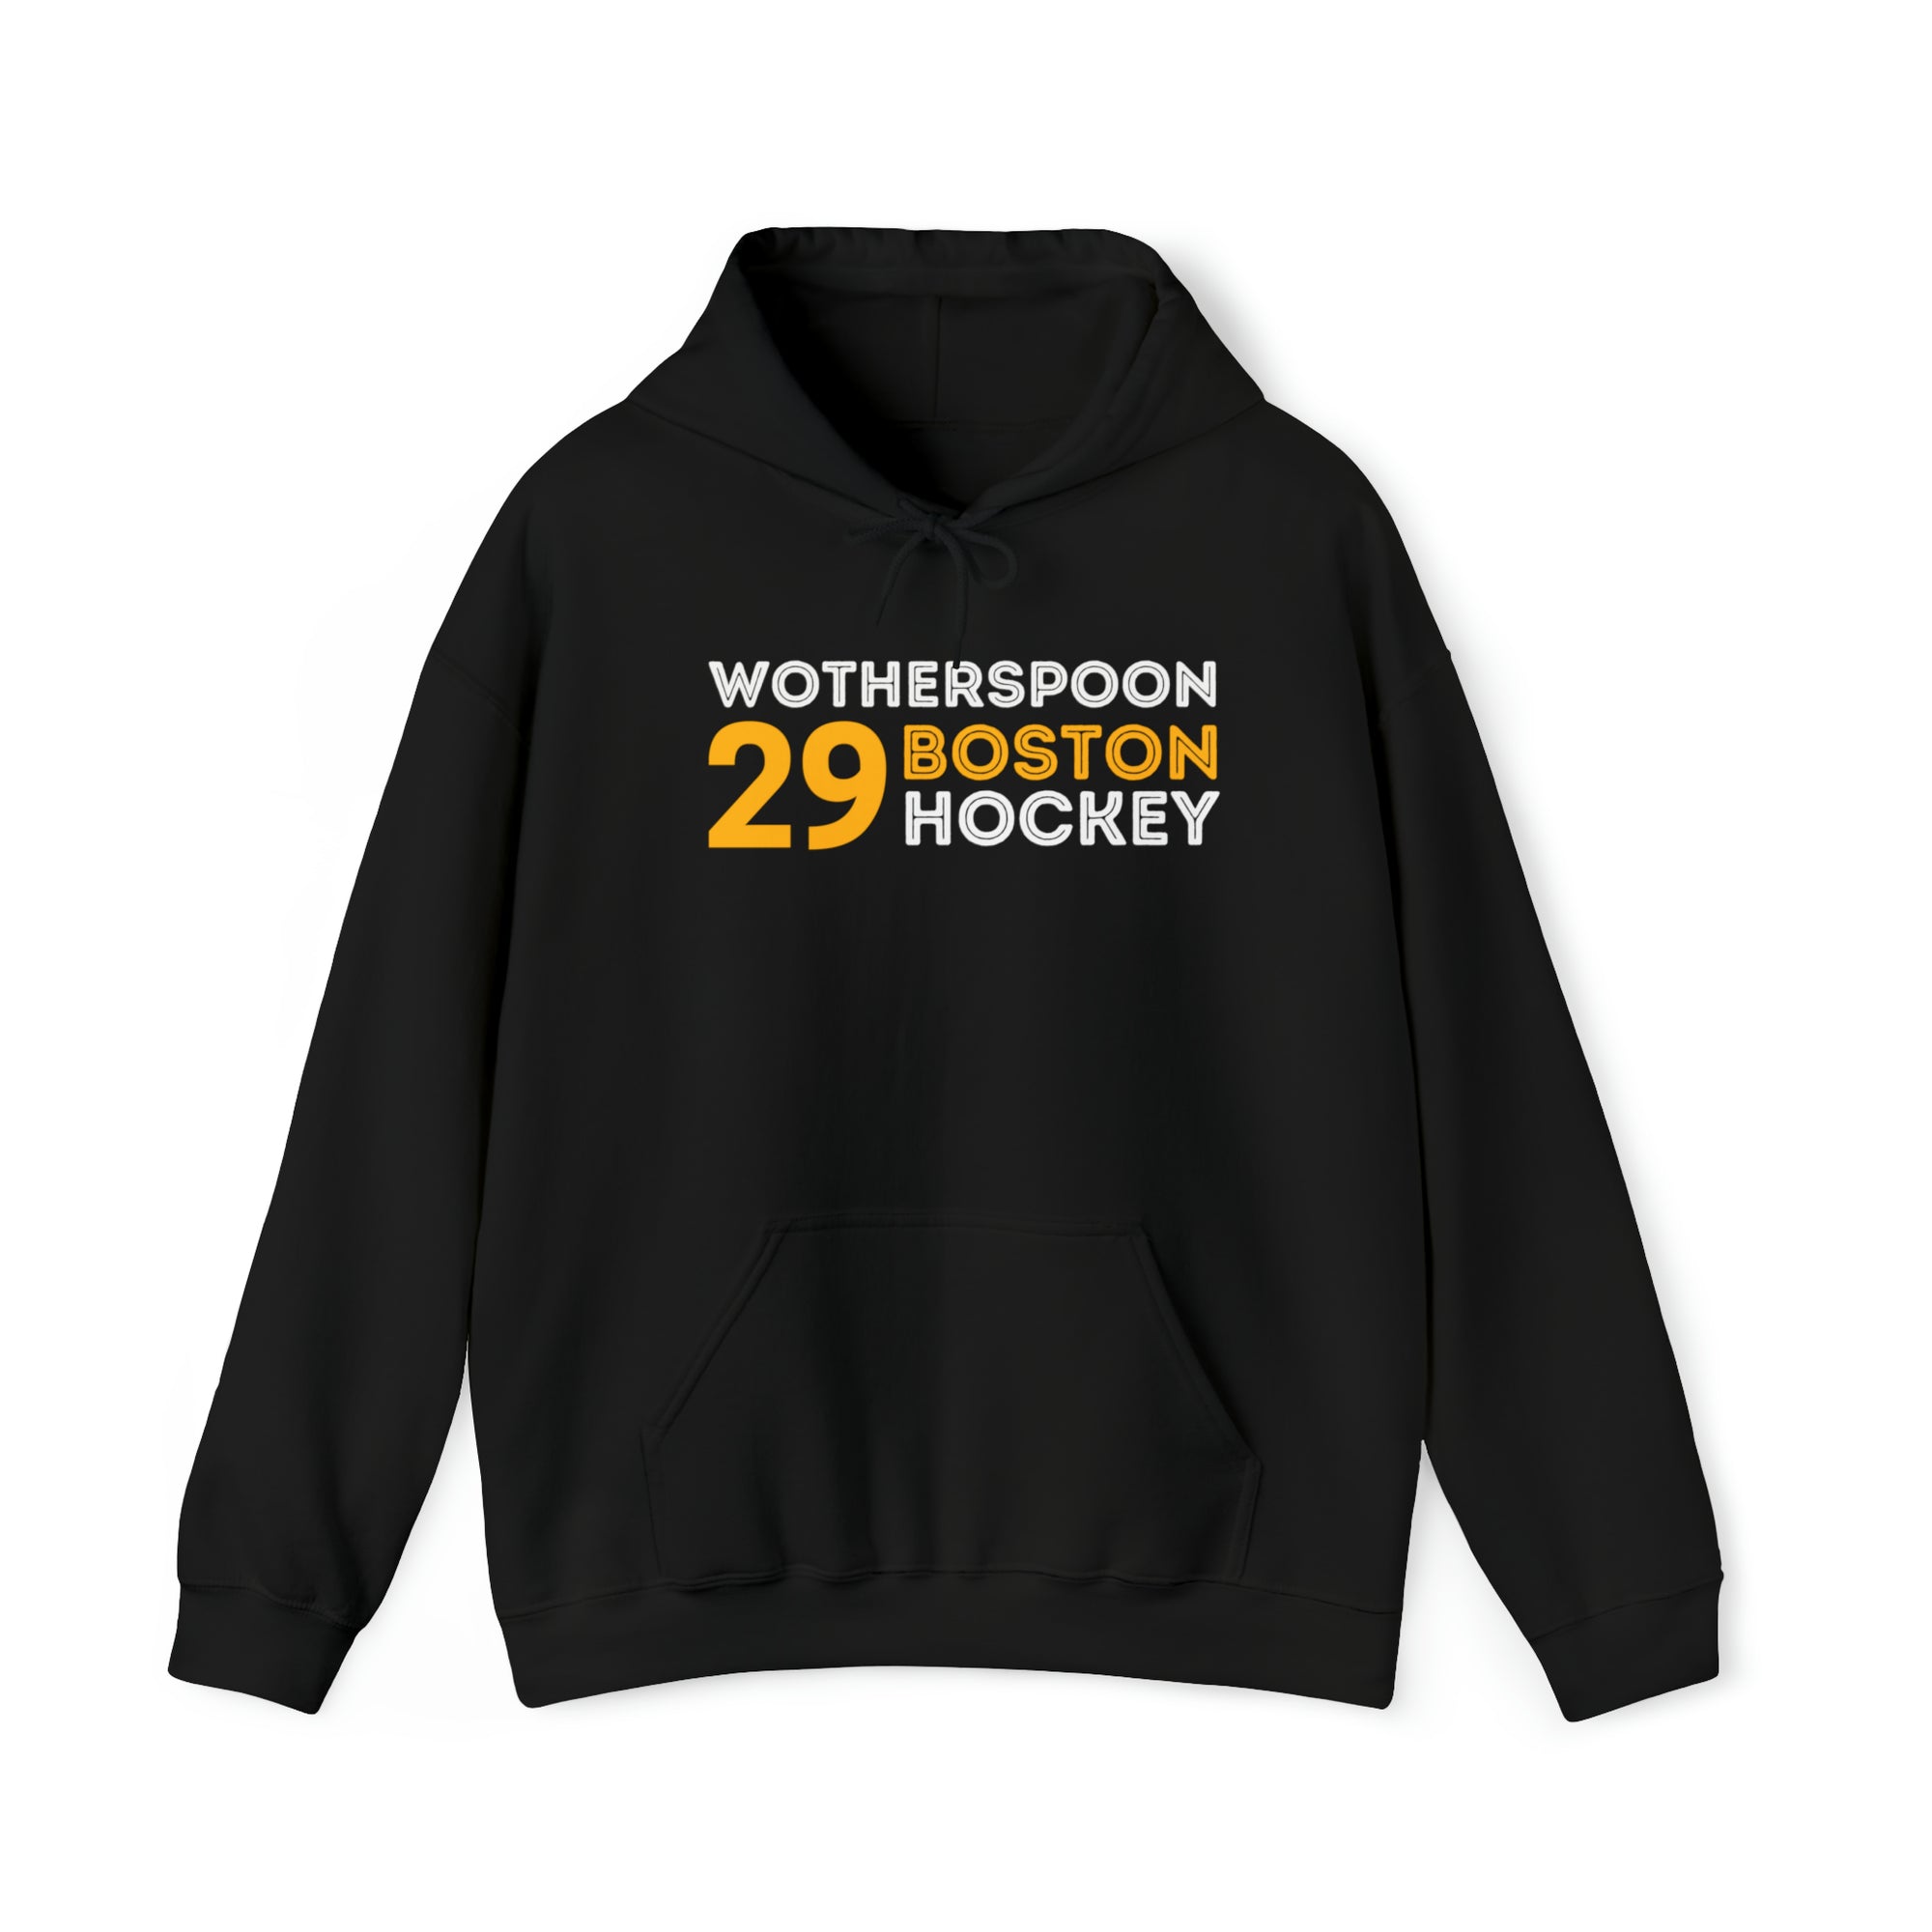 Wotherspoon 29 Boston Hockey Grafitti Wall Design Unisex Hooded Sweatshirt